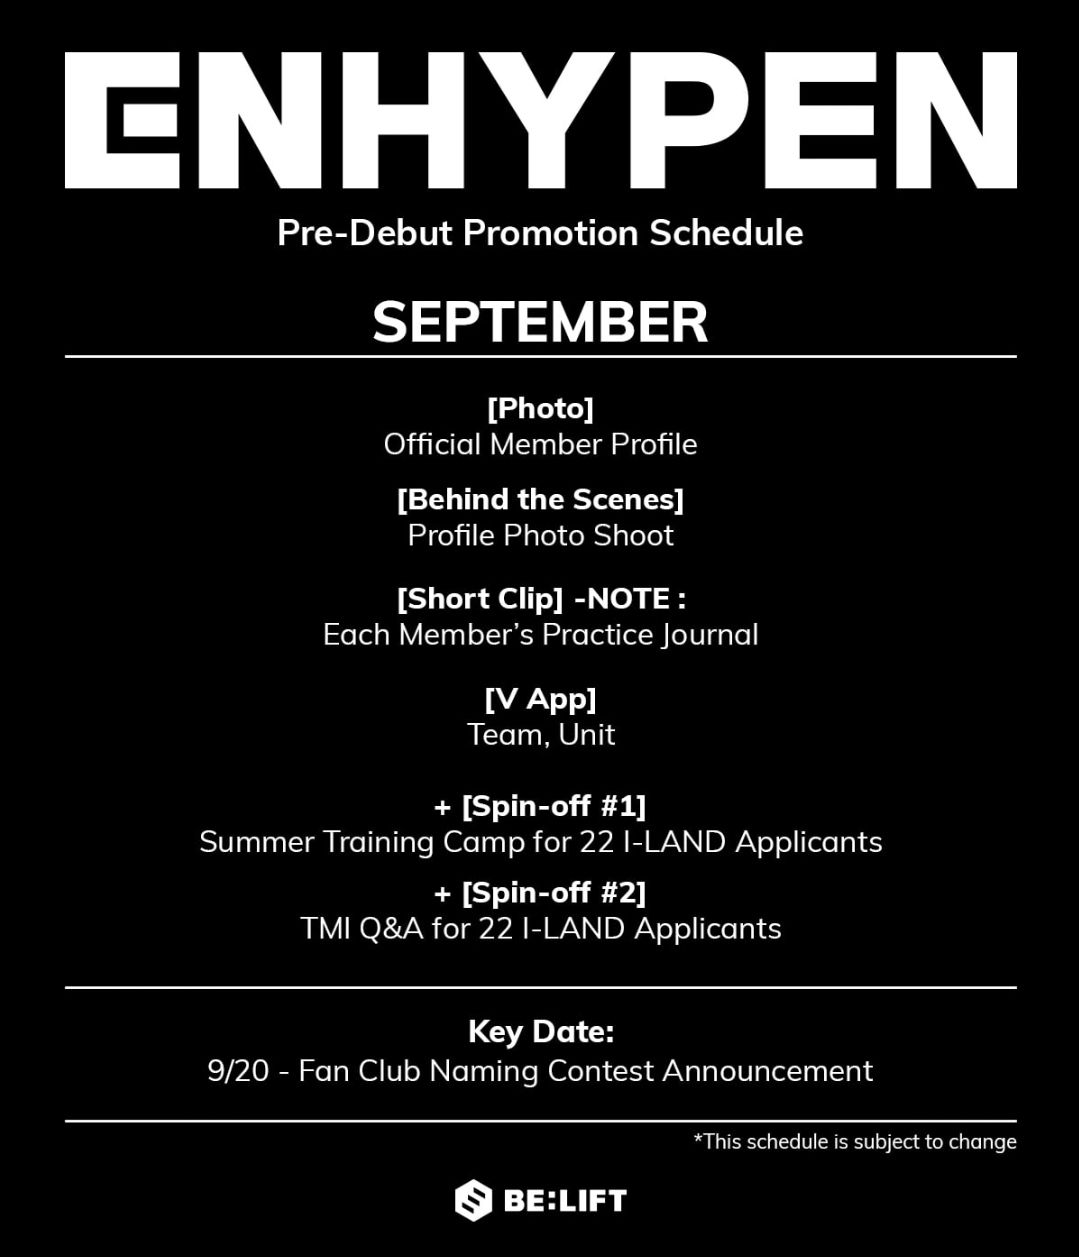 Jadwal promosi pre-debut ENHYPEN.*